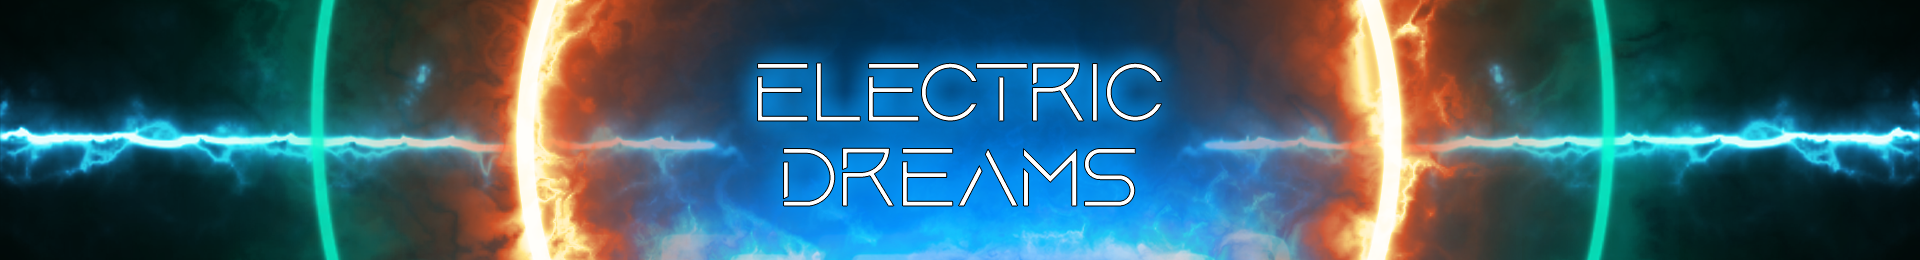 Electric Dreams banner